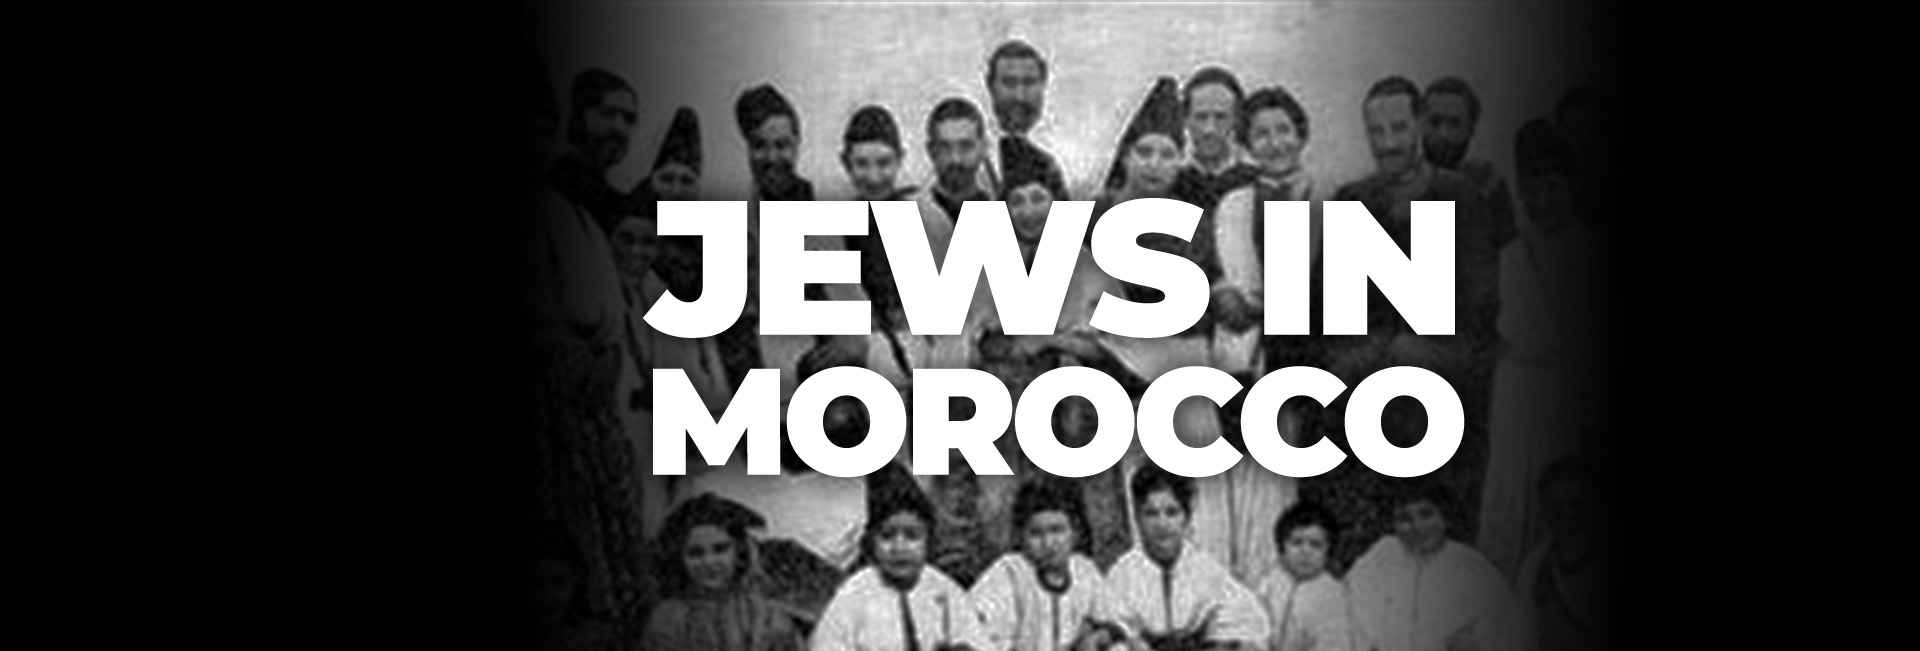 Jews in Morocco – Expulsion and Hardship